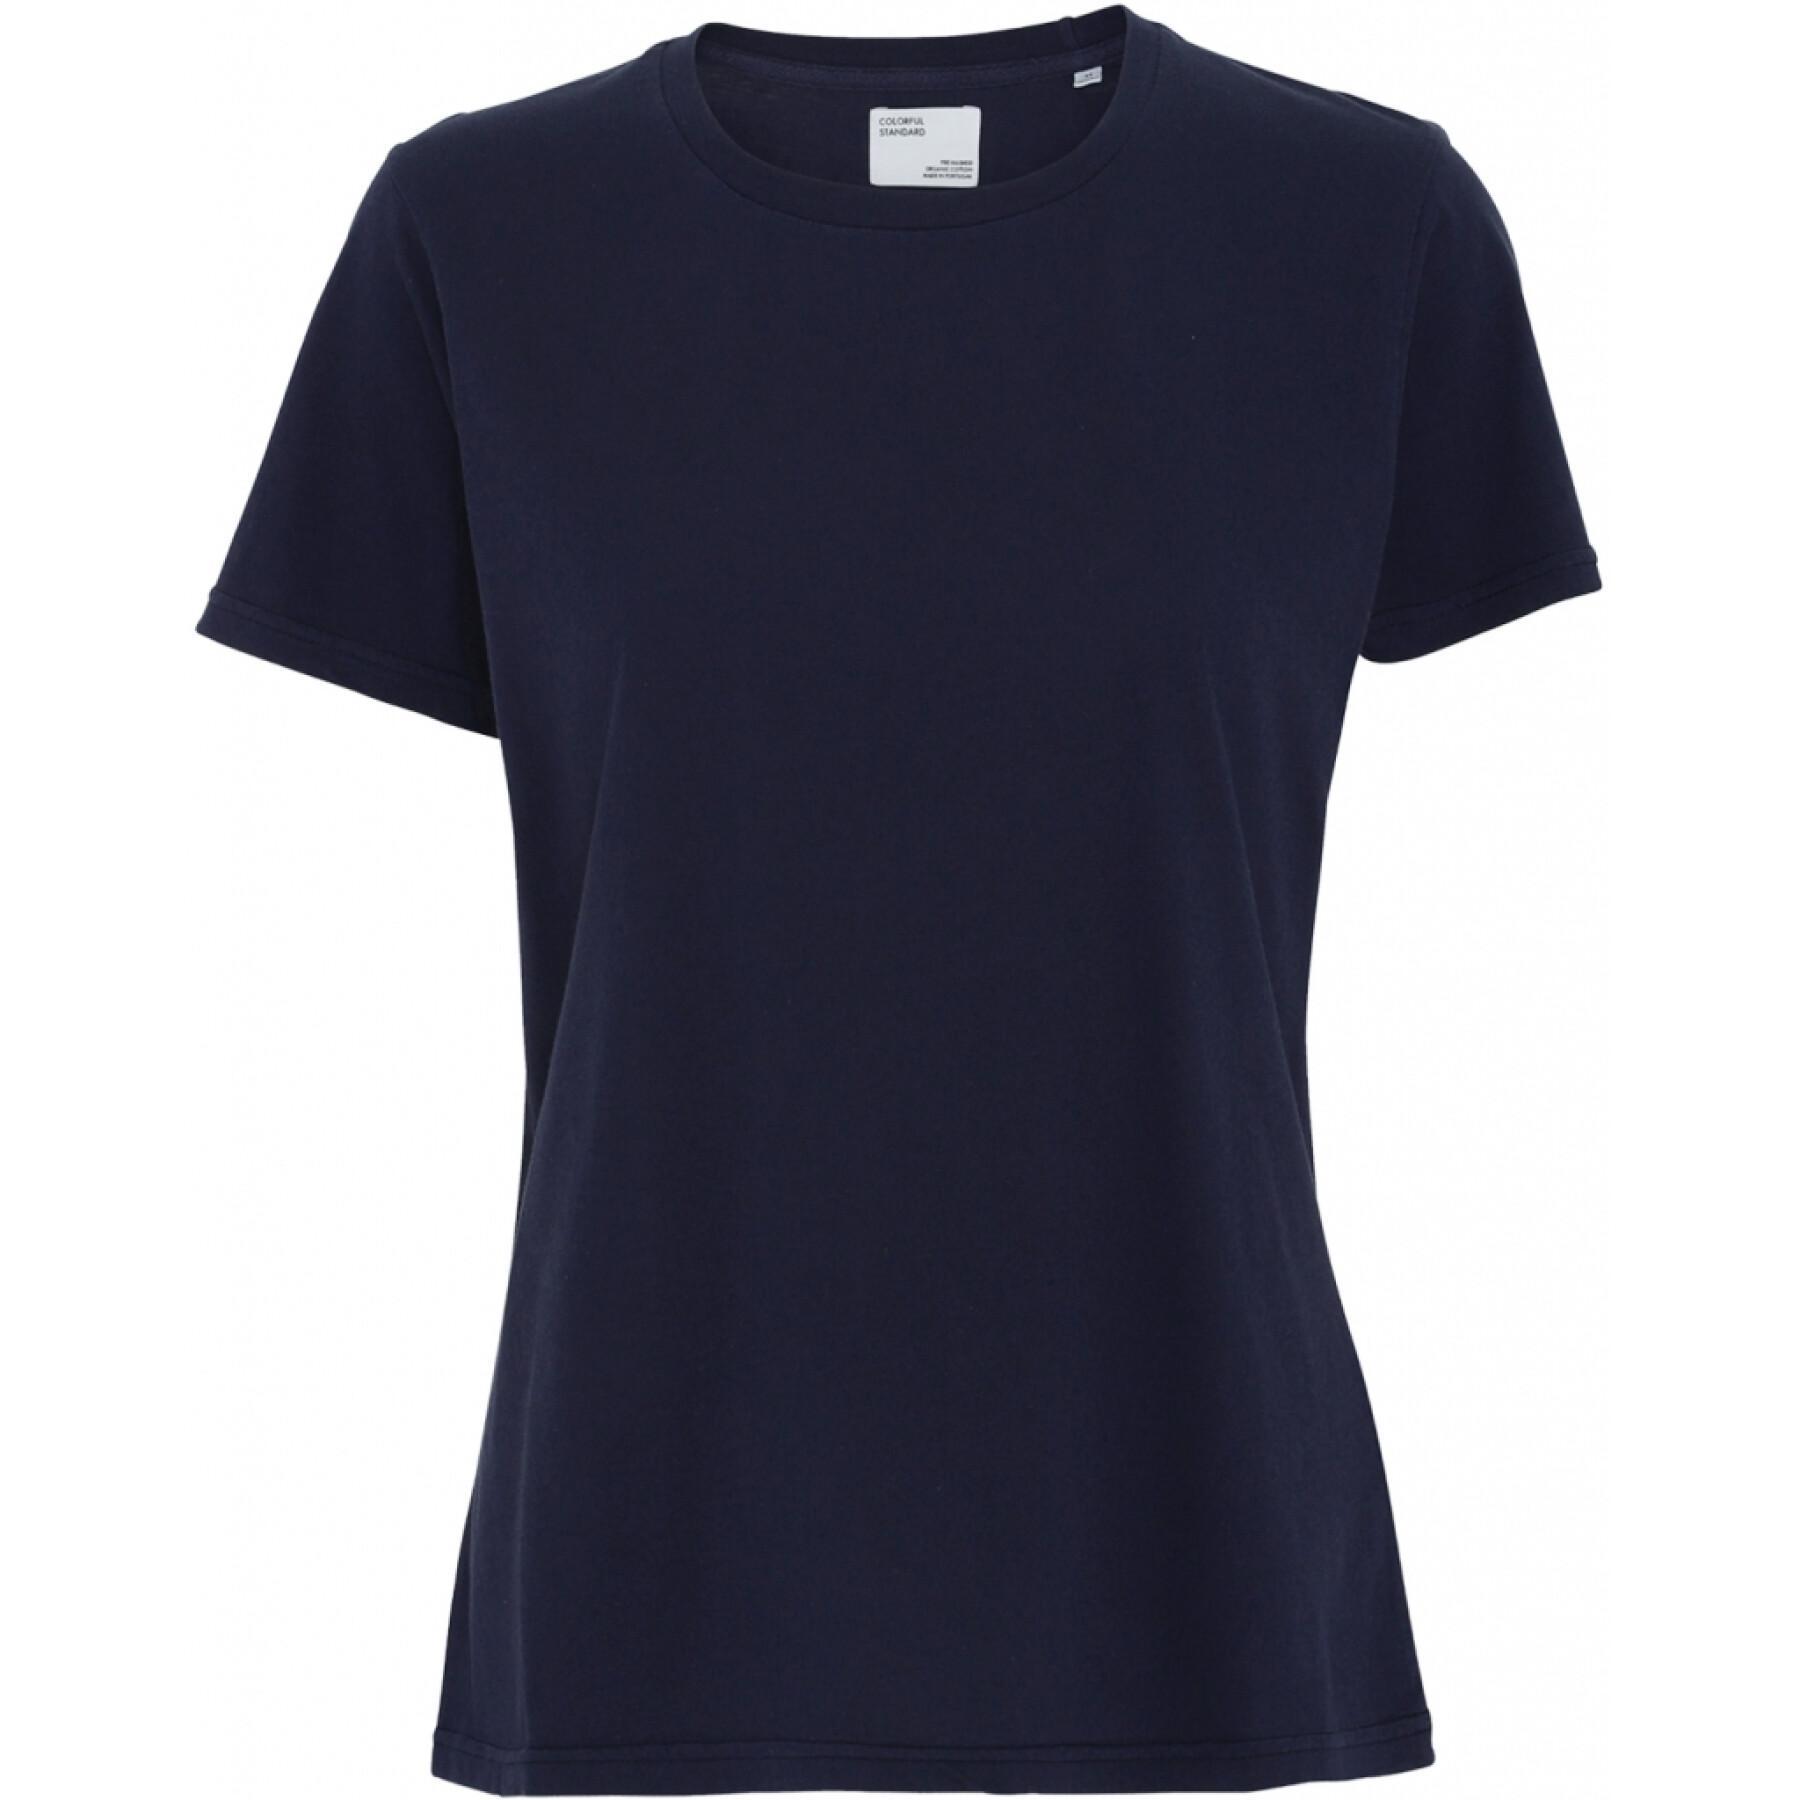 Women's T-shirt Colorful Standard Light Organic navy blue